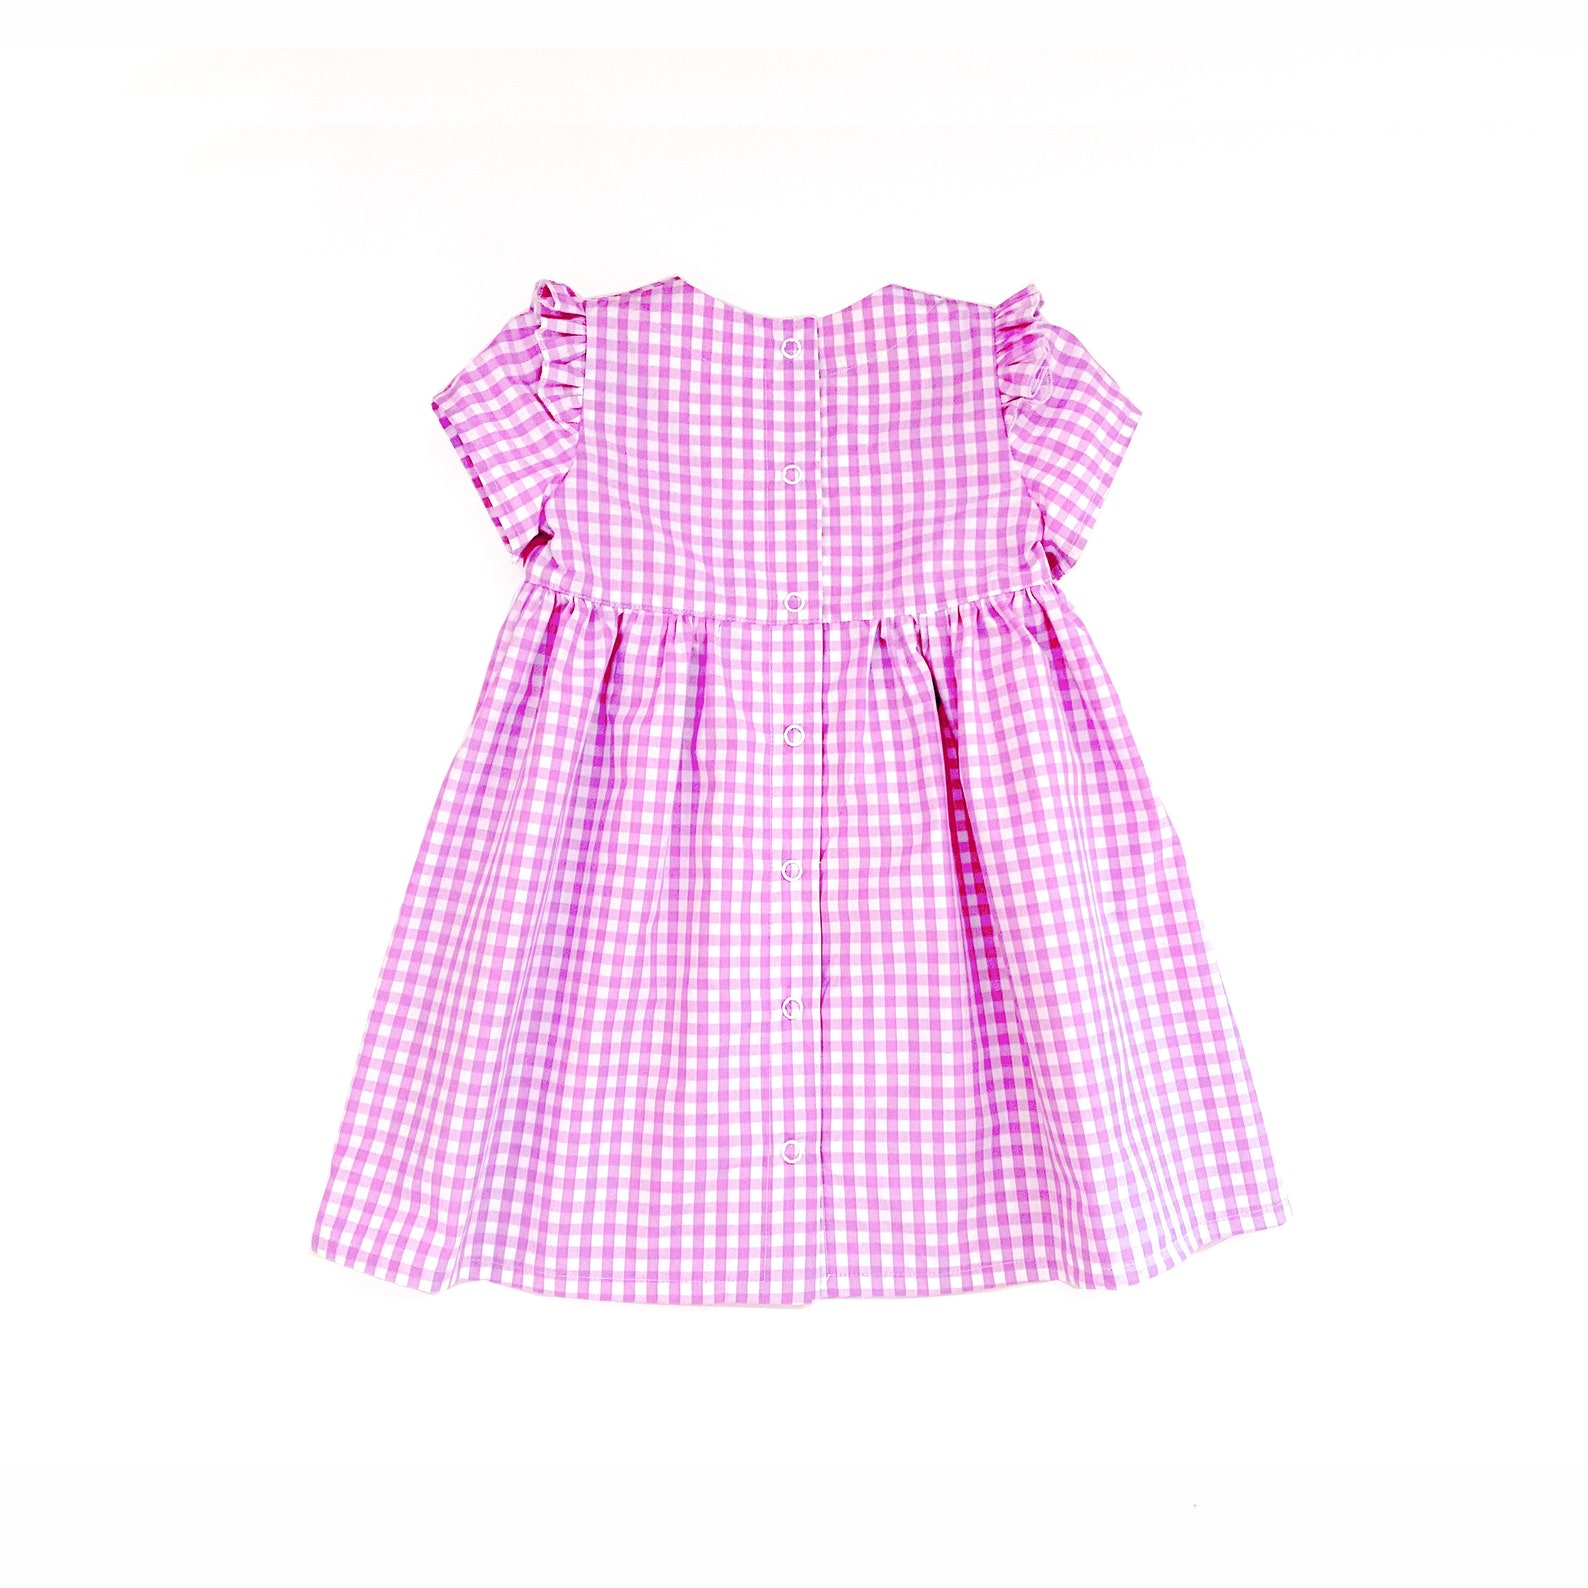 Sanremo Baby Girl Dress Pattern. Sewing Layered PDF Pattern | Etsy